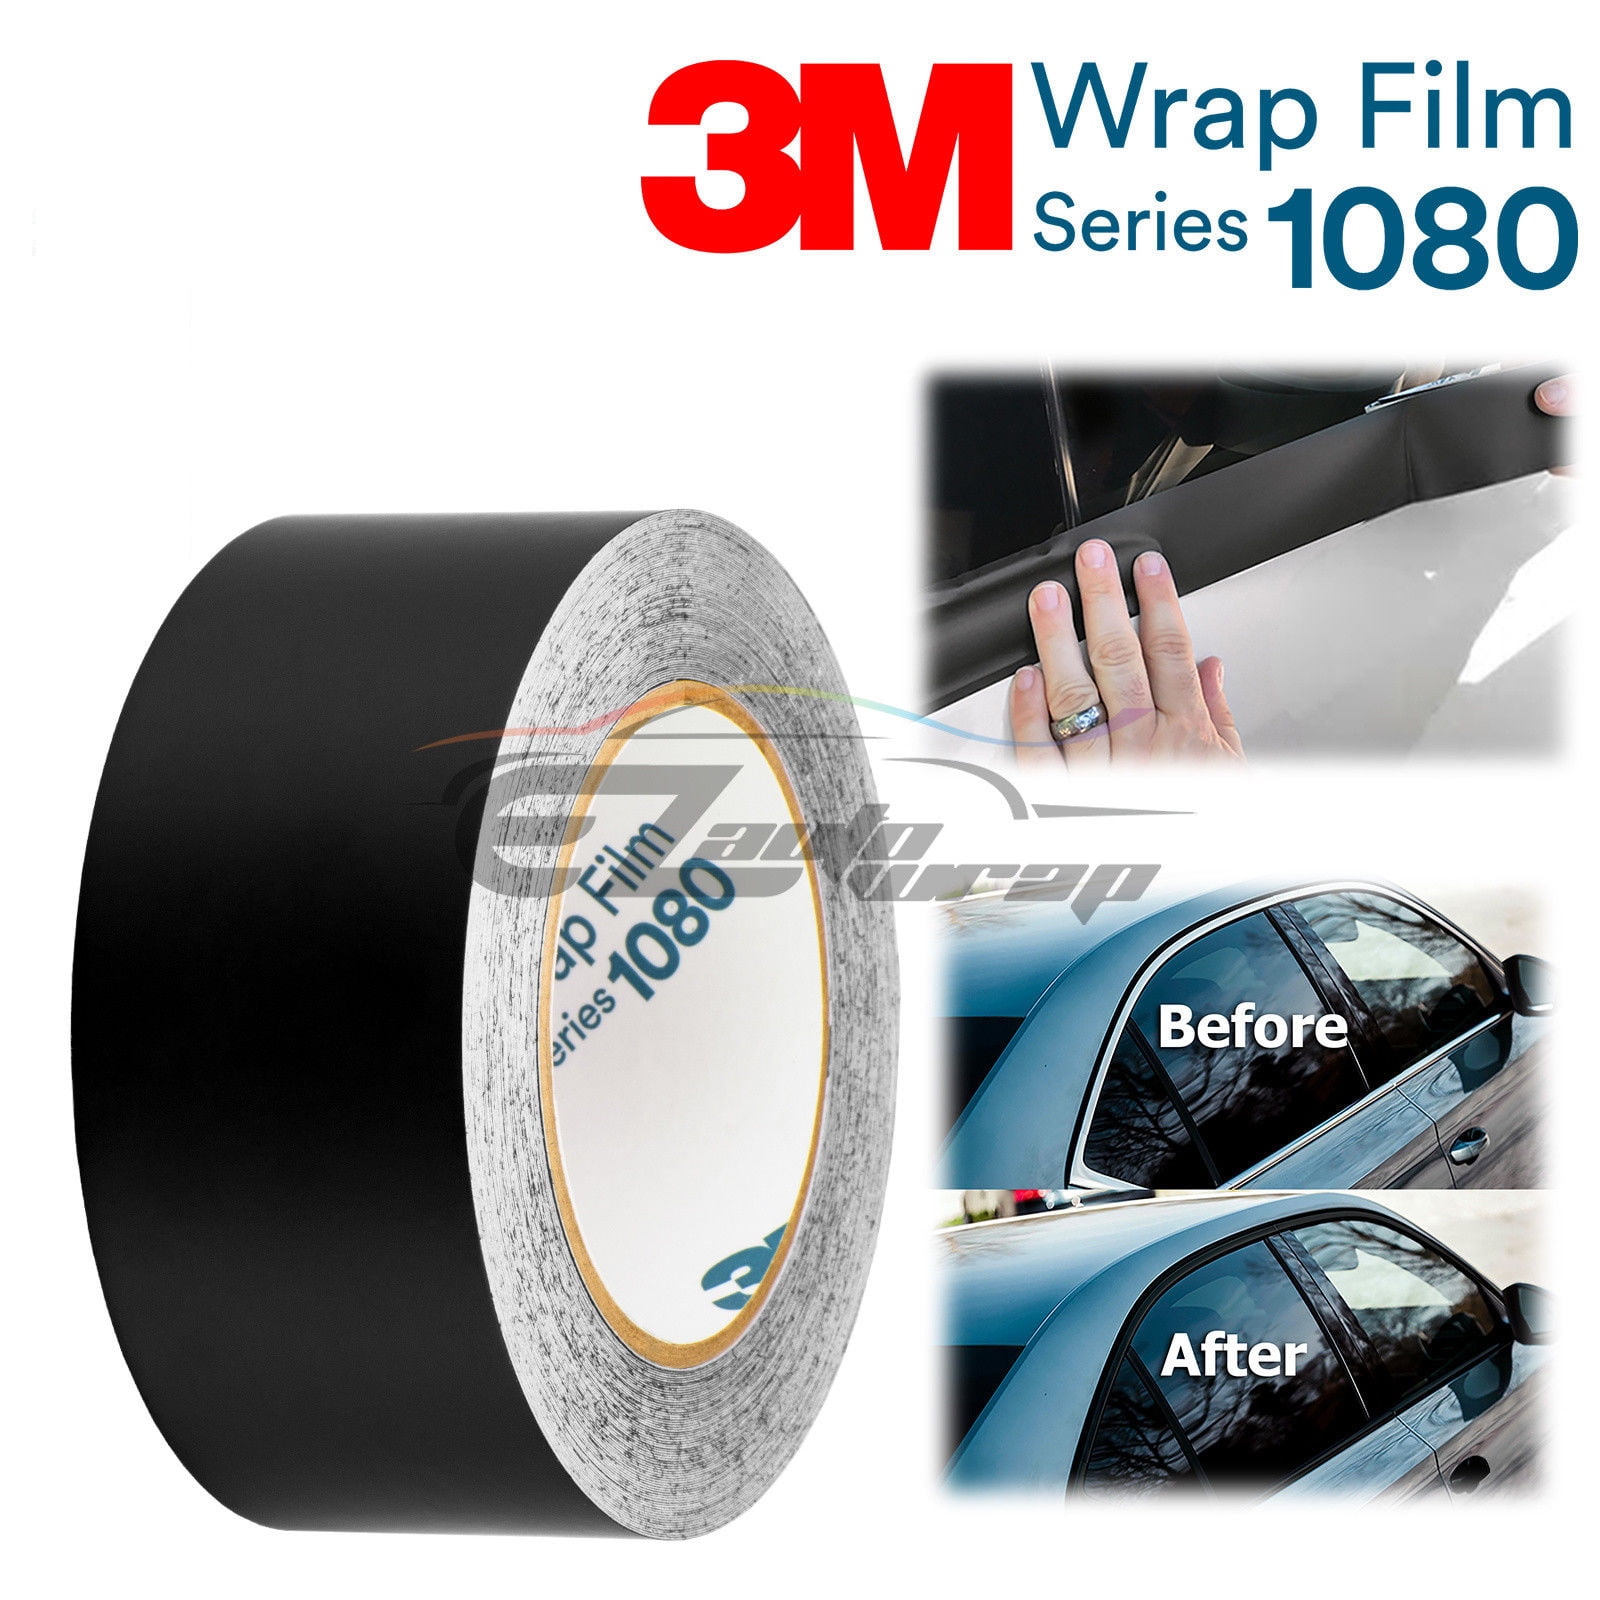 3M Trim Wrap ( Gloss Black Chrome Delete ) - Premium Auto Styling